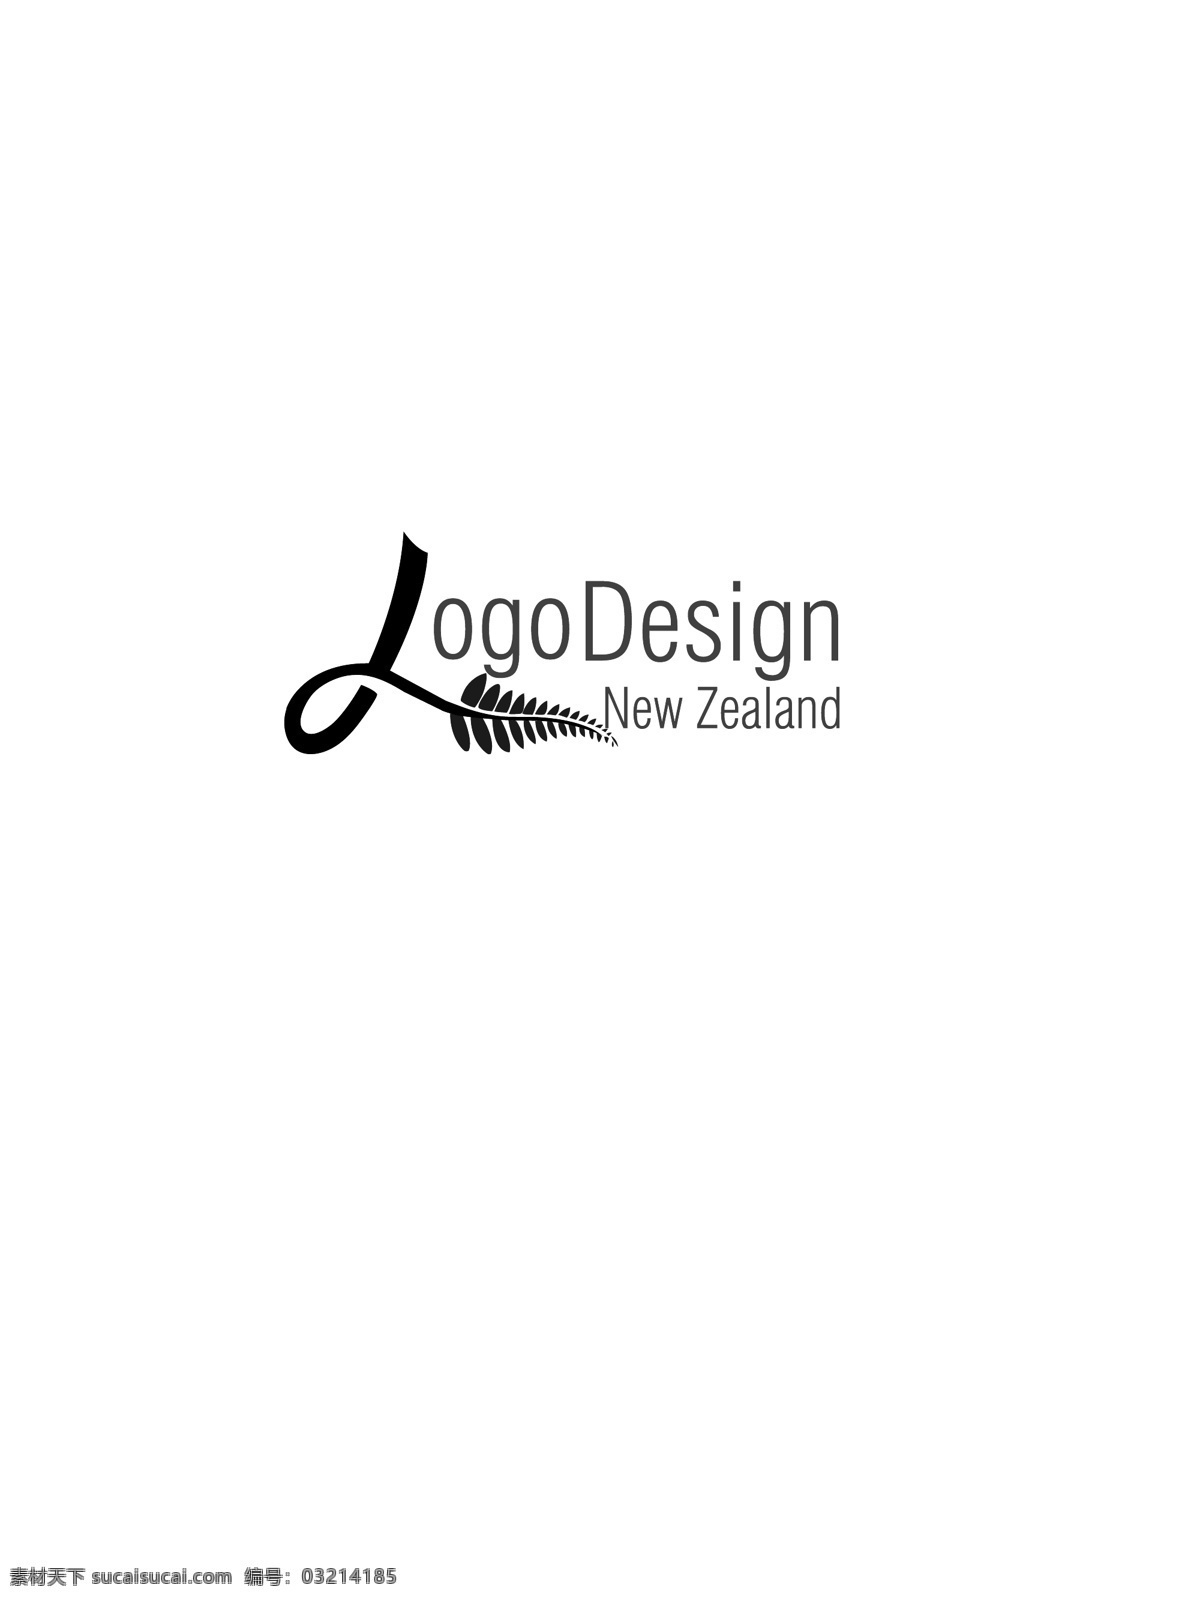 logo大全 logo 设计欣赏 商业矢量 矢量下载 logodesignnewzealand 硬件 公司 标志设计 欣赏 网页矢量 矢量图 其他矢量图